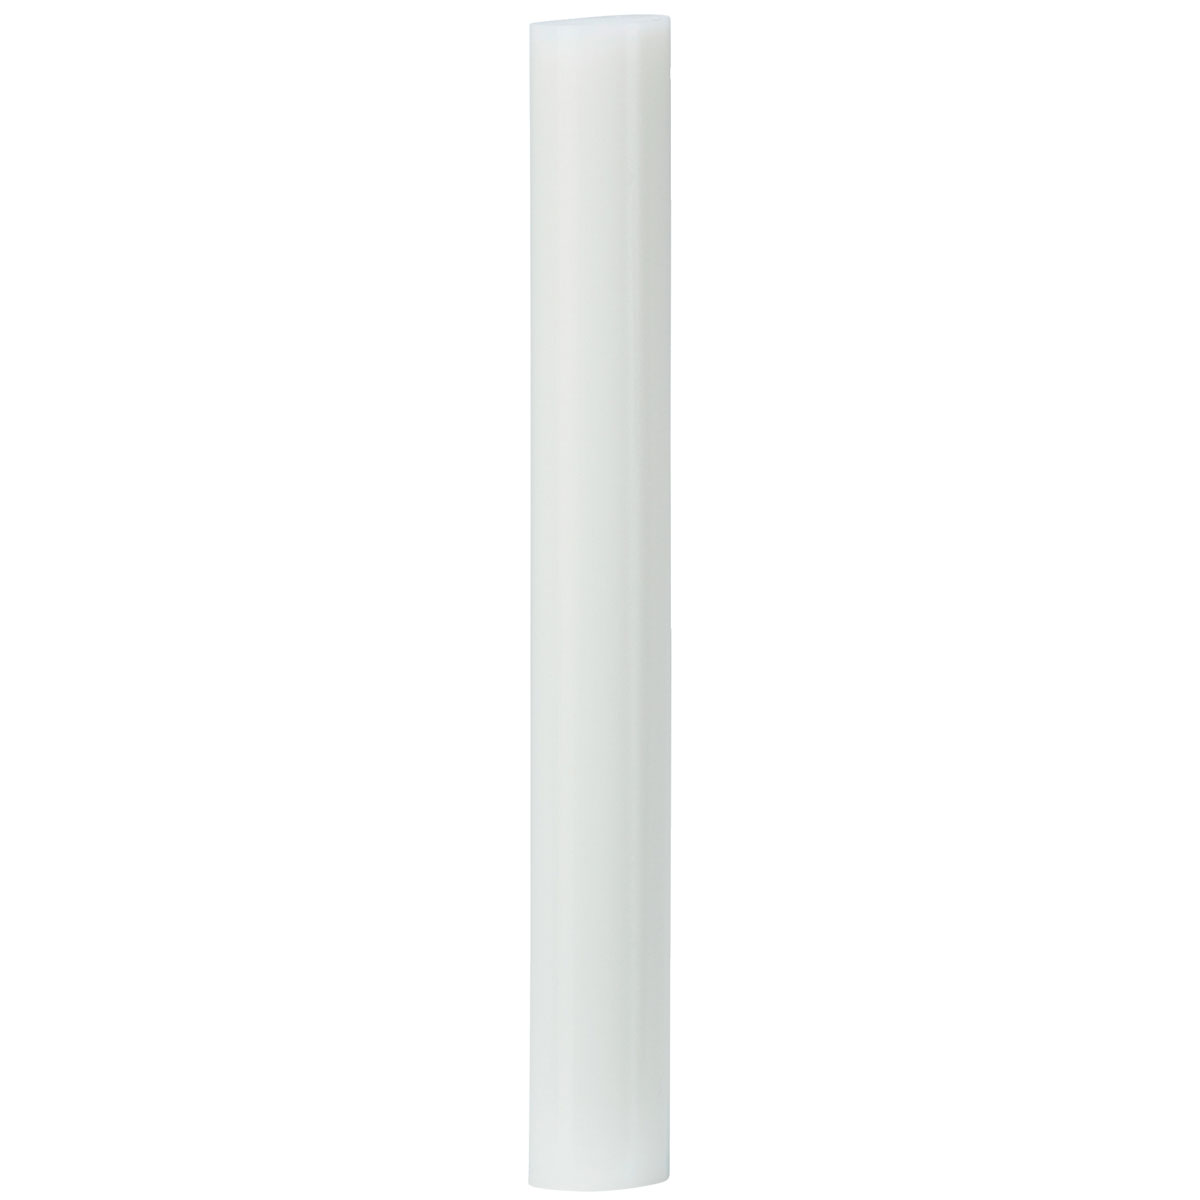 Heißklebesticks, weiß, 1,2x9 cm, 14 Stück